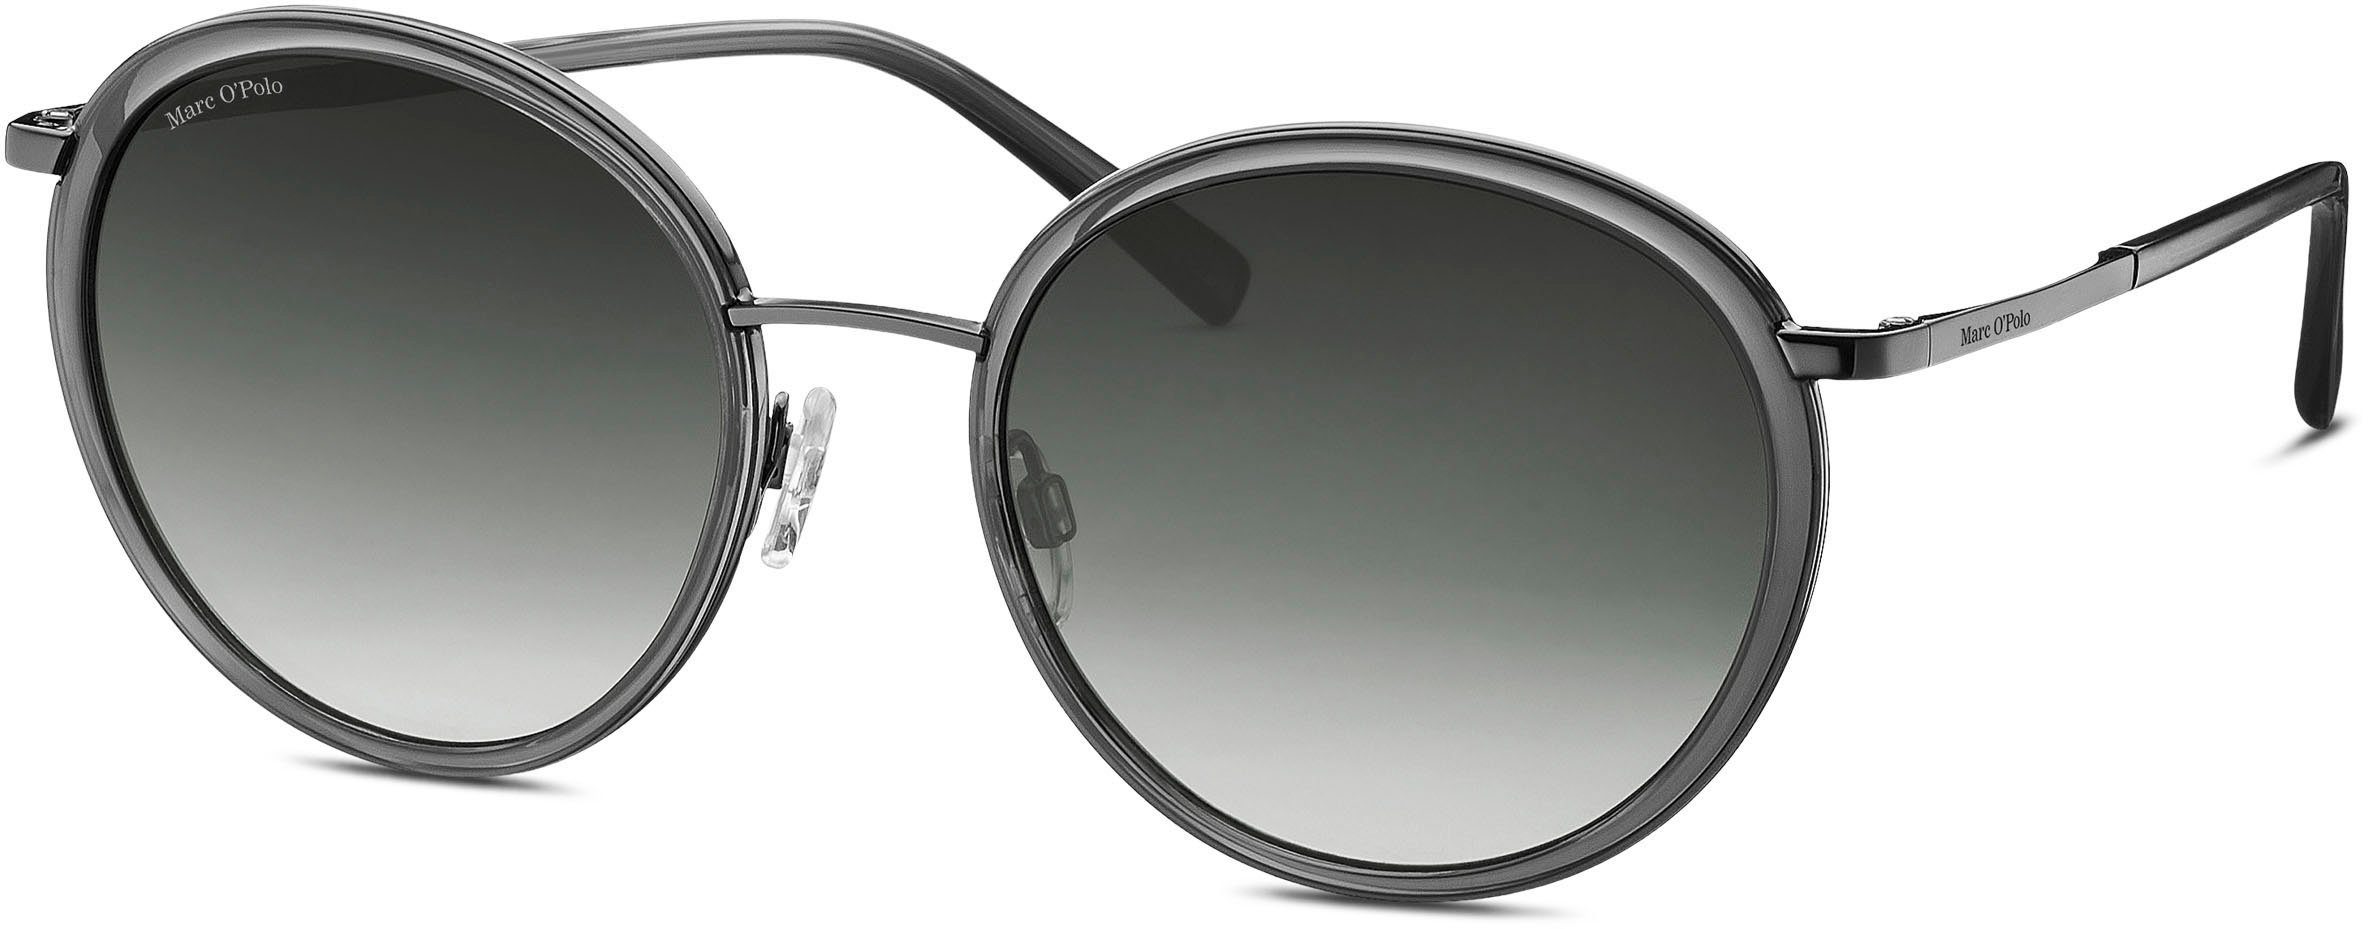 Sonnenbrille 505109 Modell Panto-Form grau O'Polo Marc